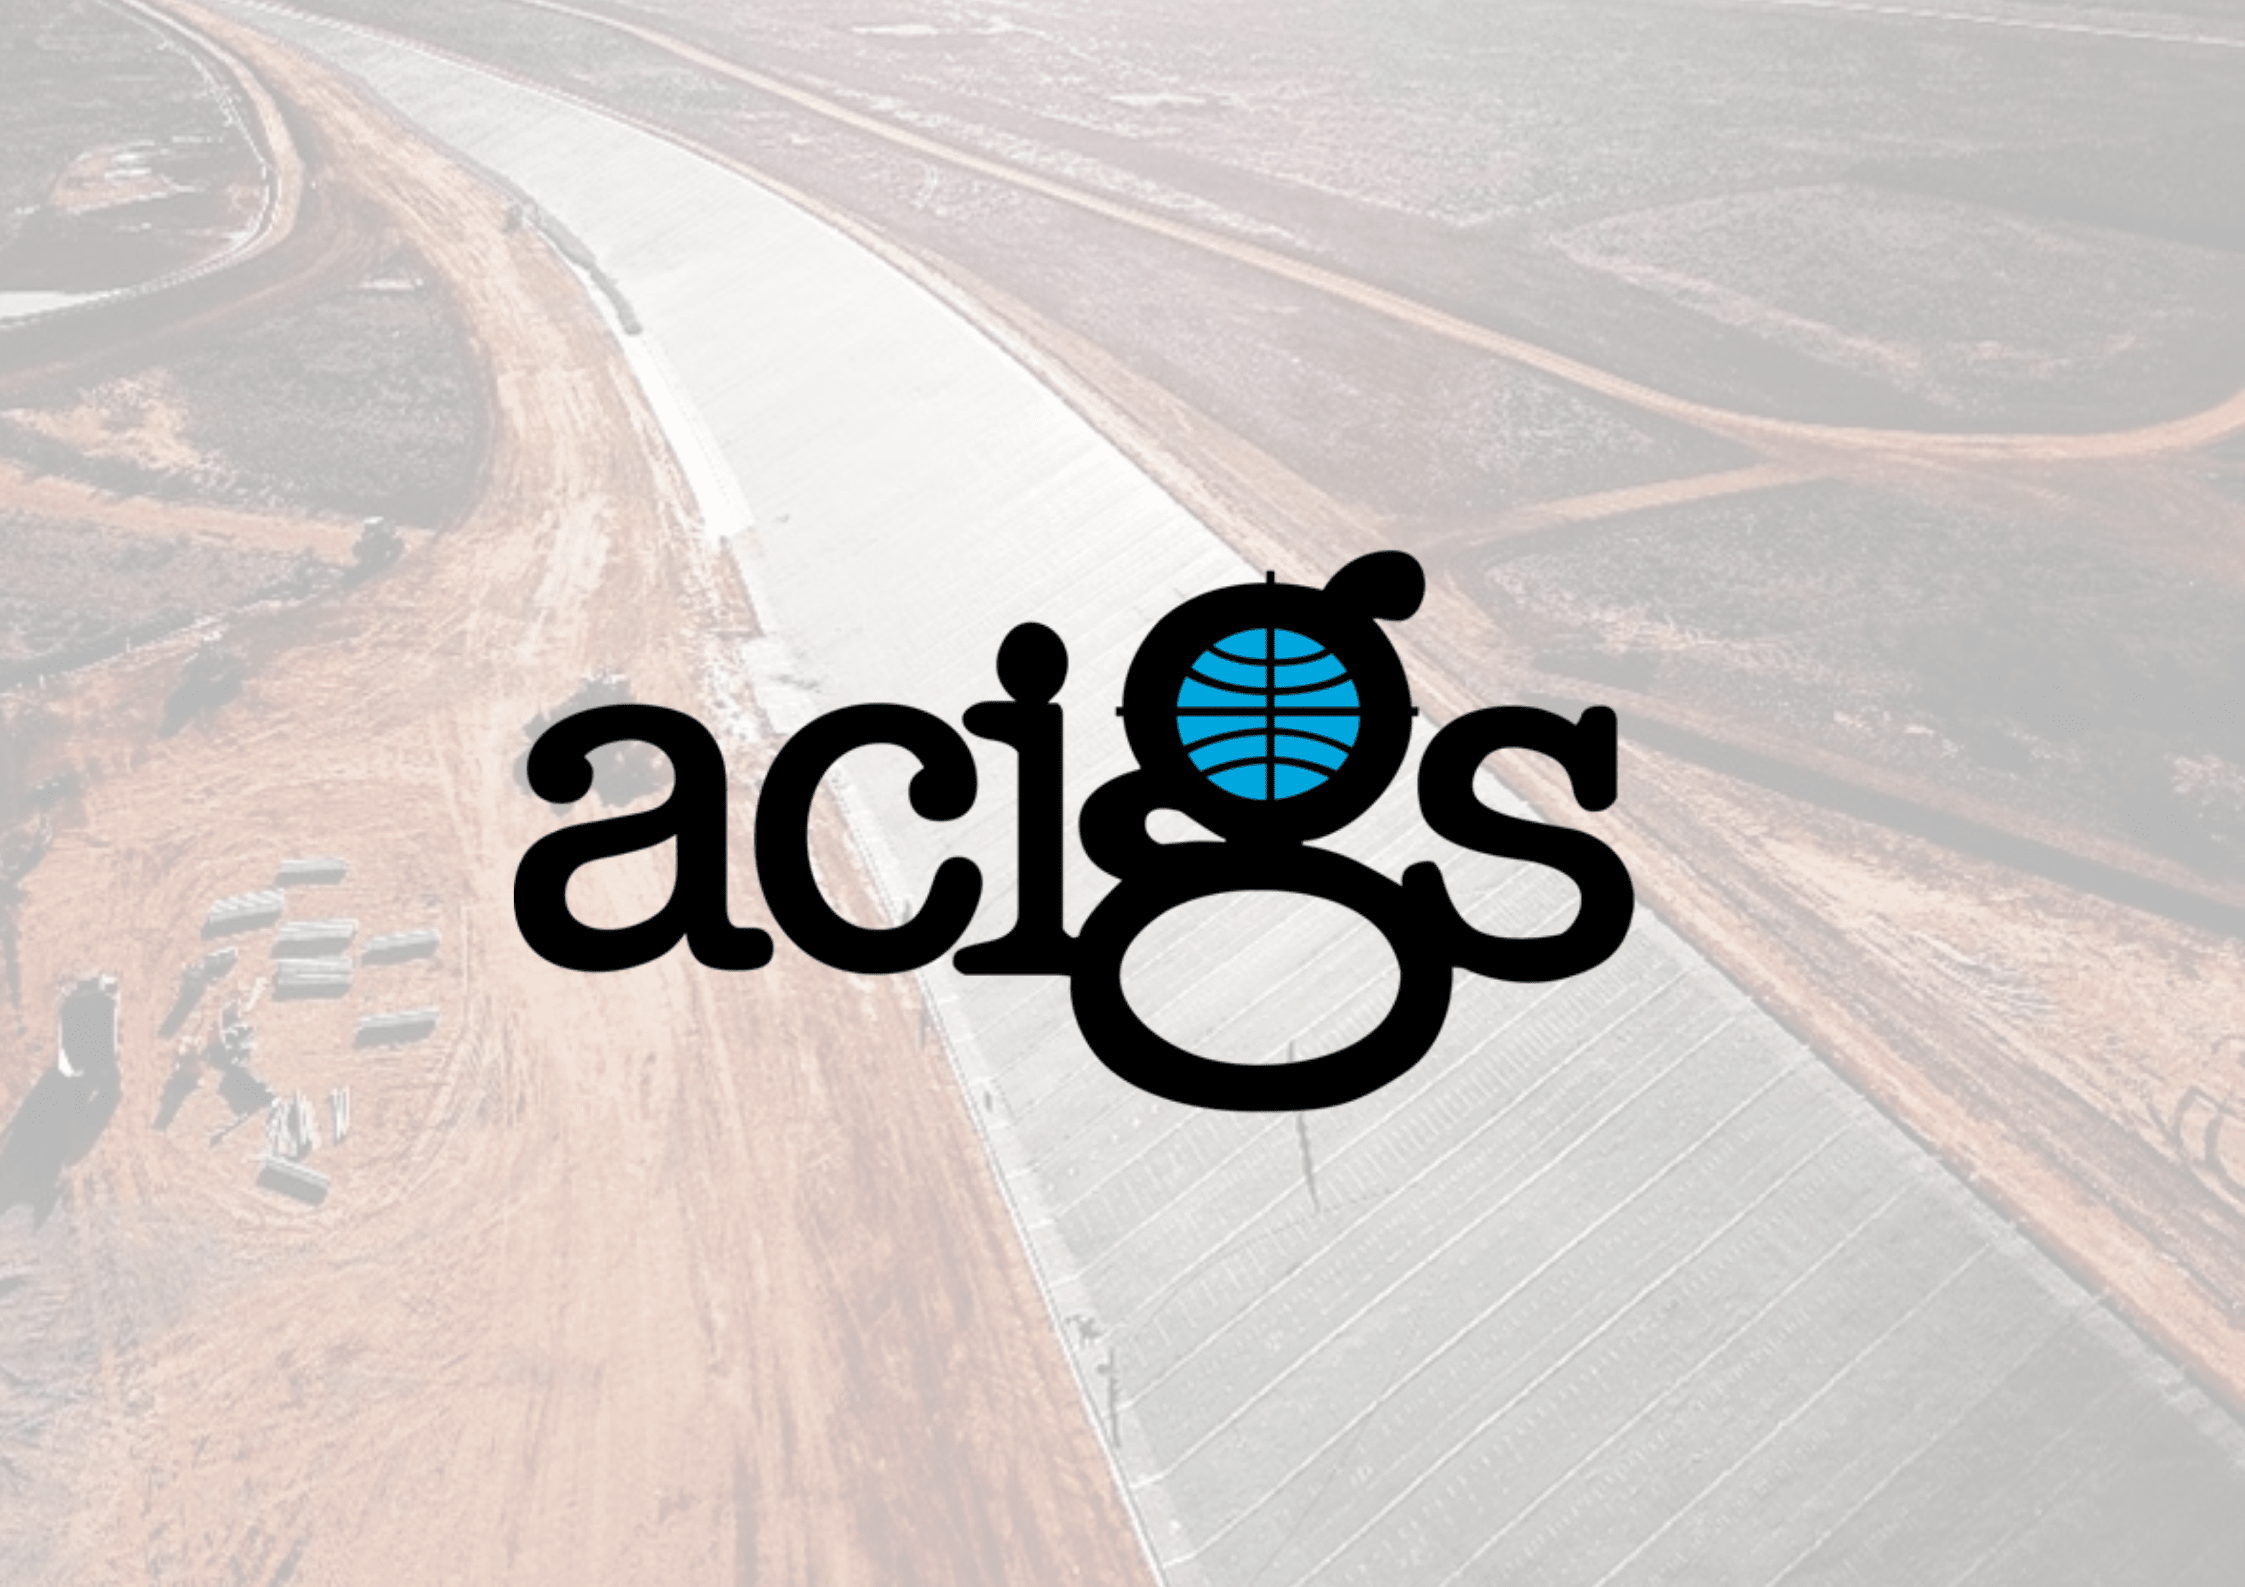 Acigs 3